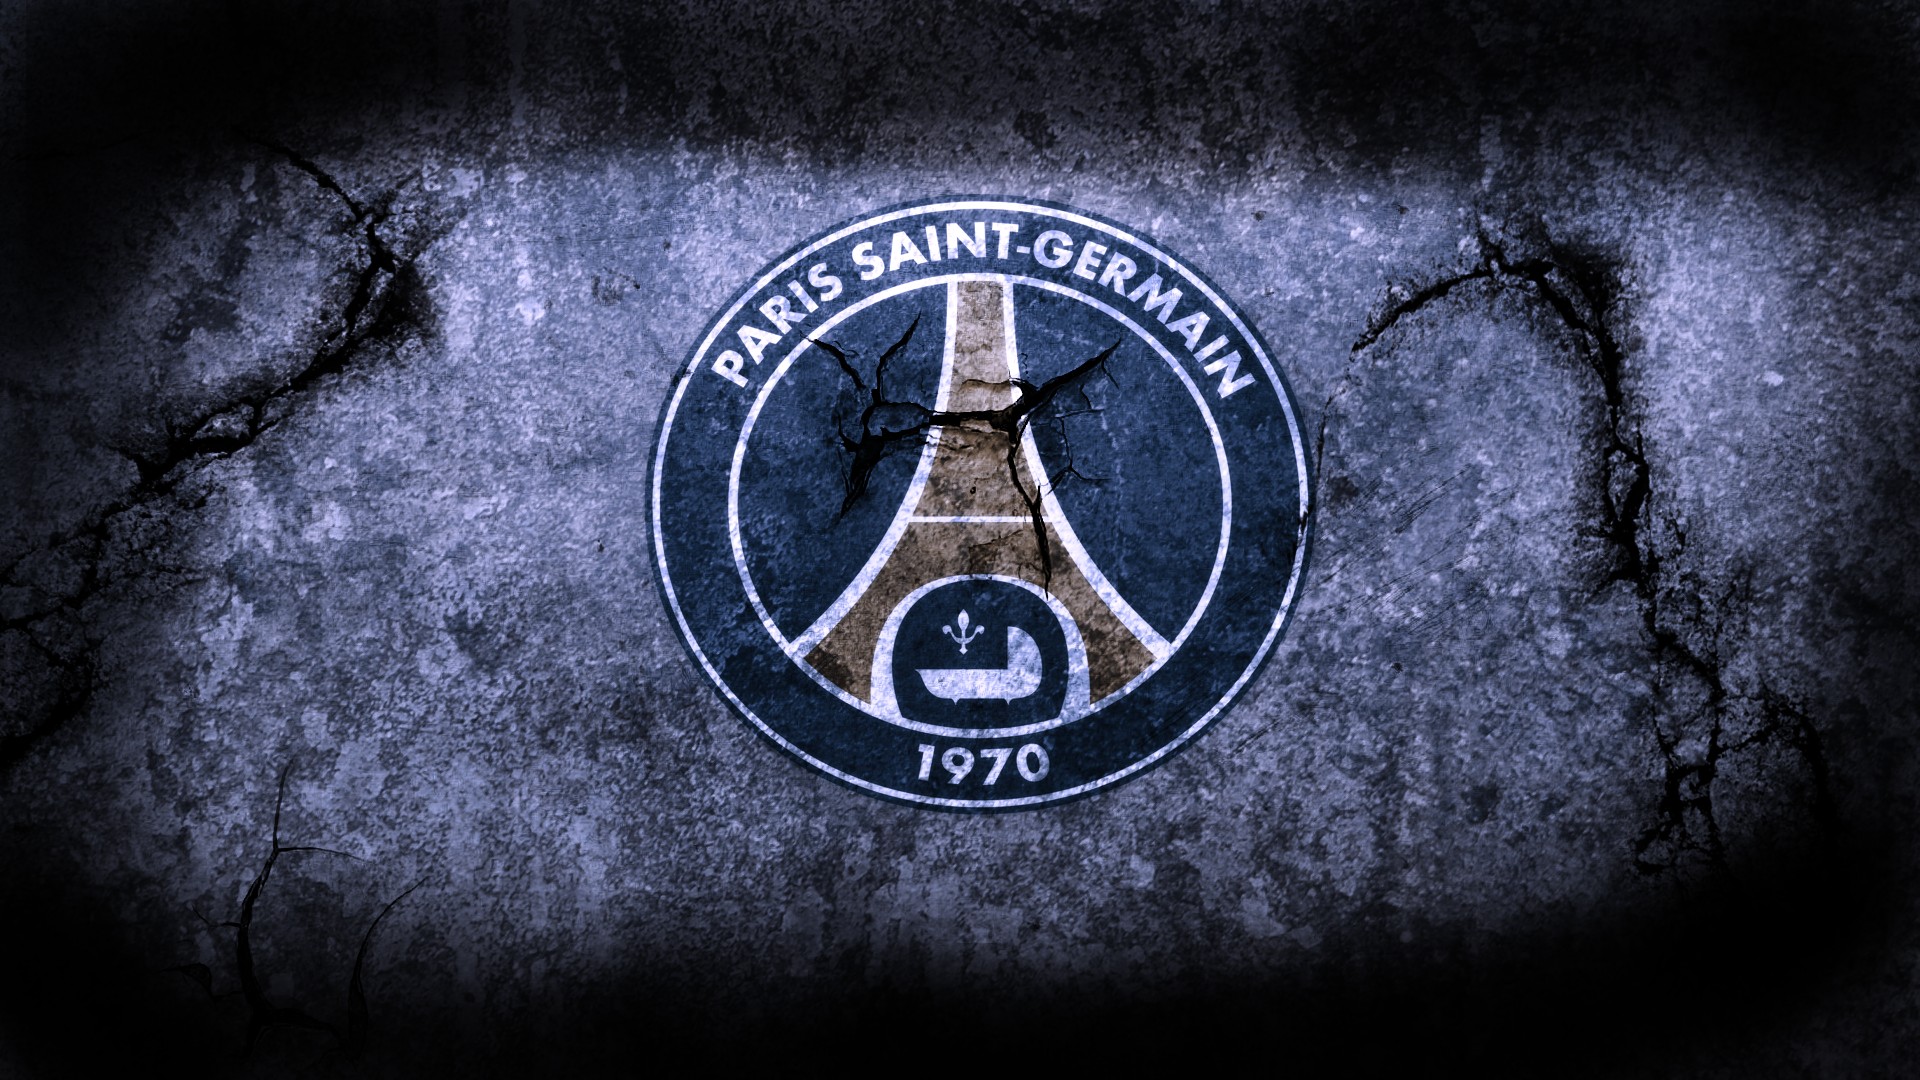 paris saint germain logo hd image